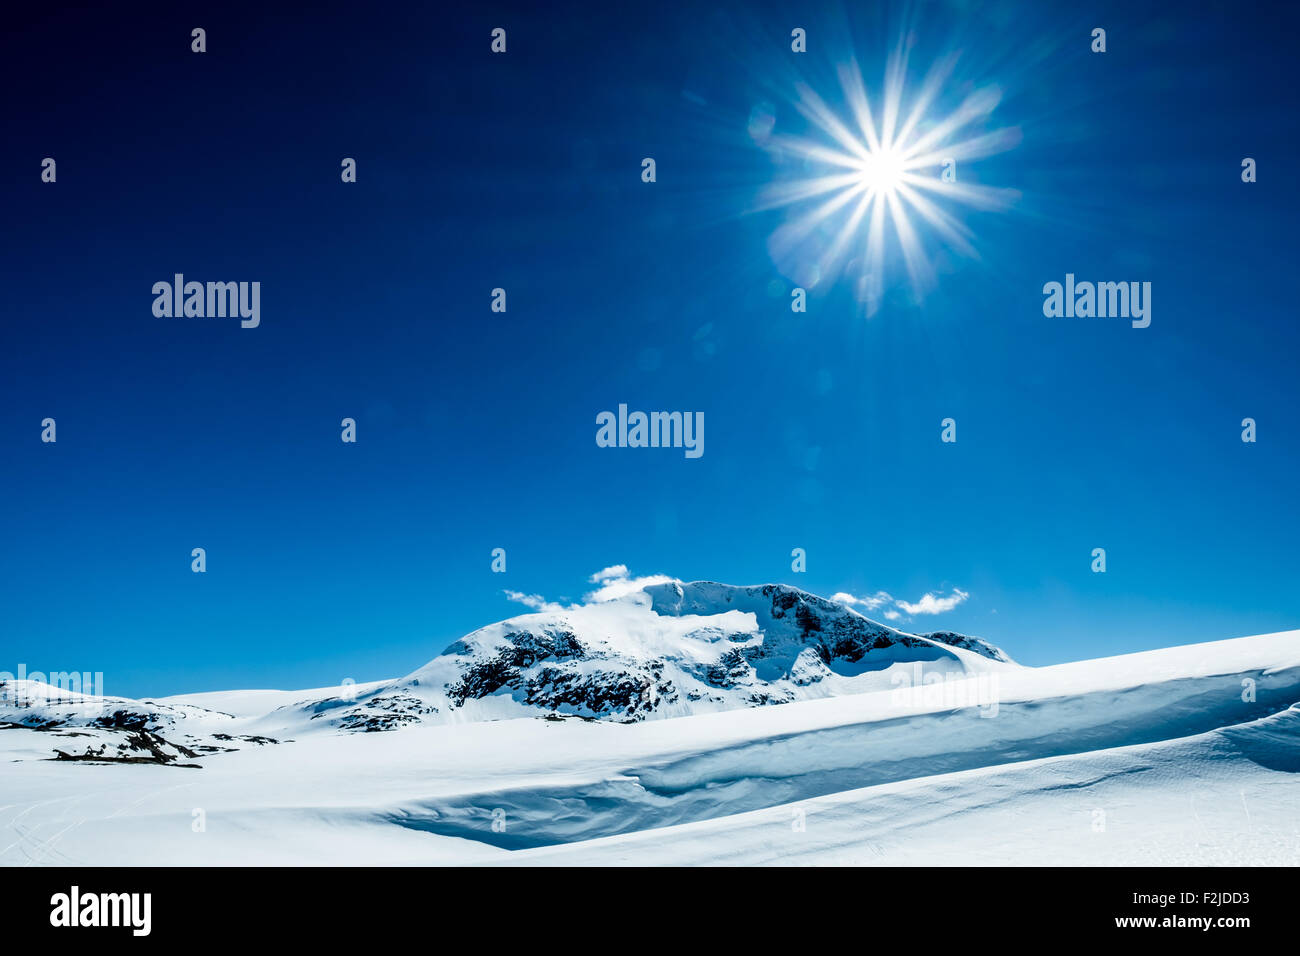 Sun in a blue sky over snowy mountain. Stock Photo